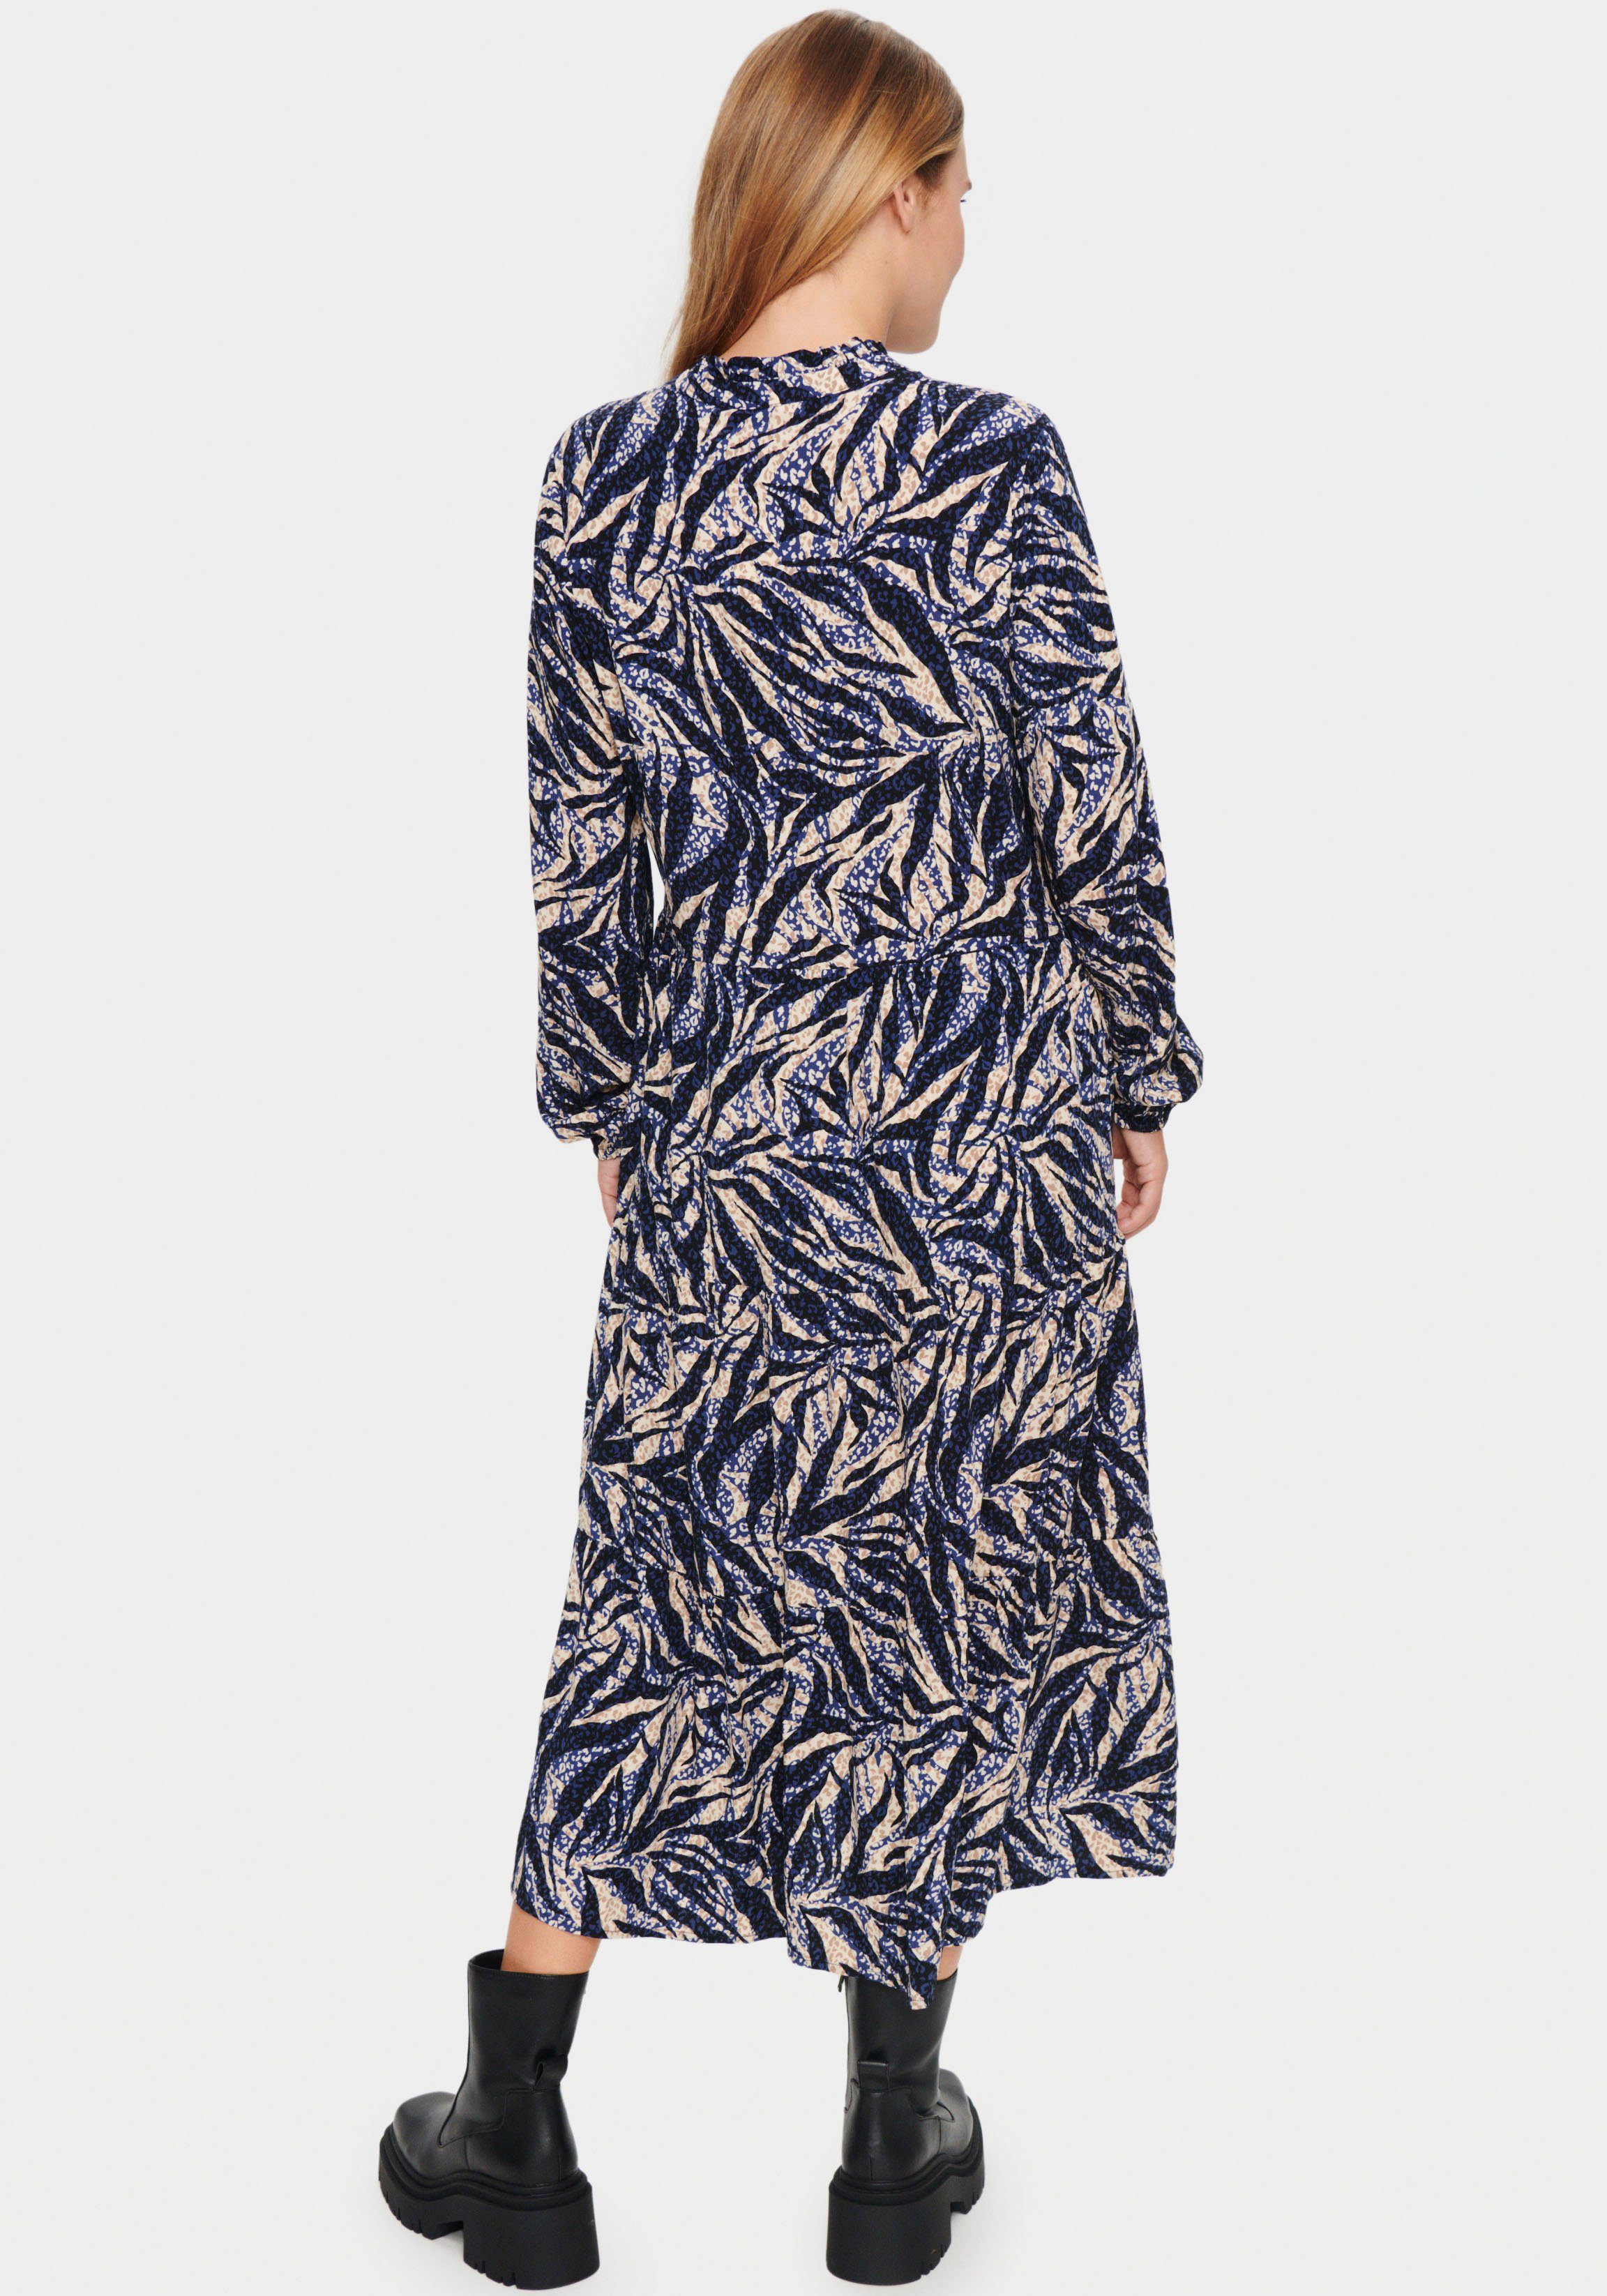 Saint Tropez Sommerkleid Zebra EdaSZ Maxi Dress mit Leaves Volant Black